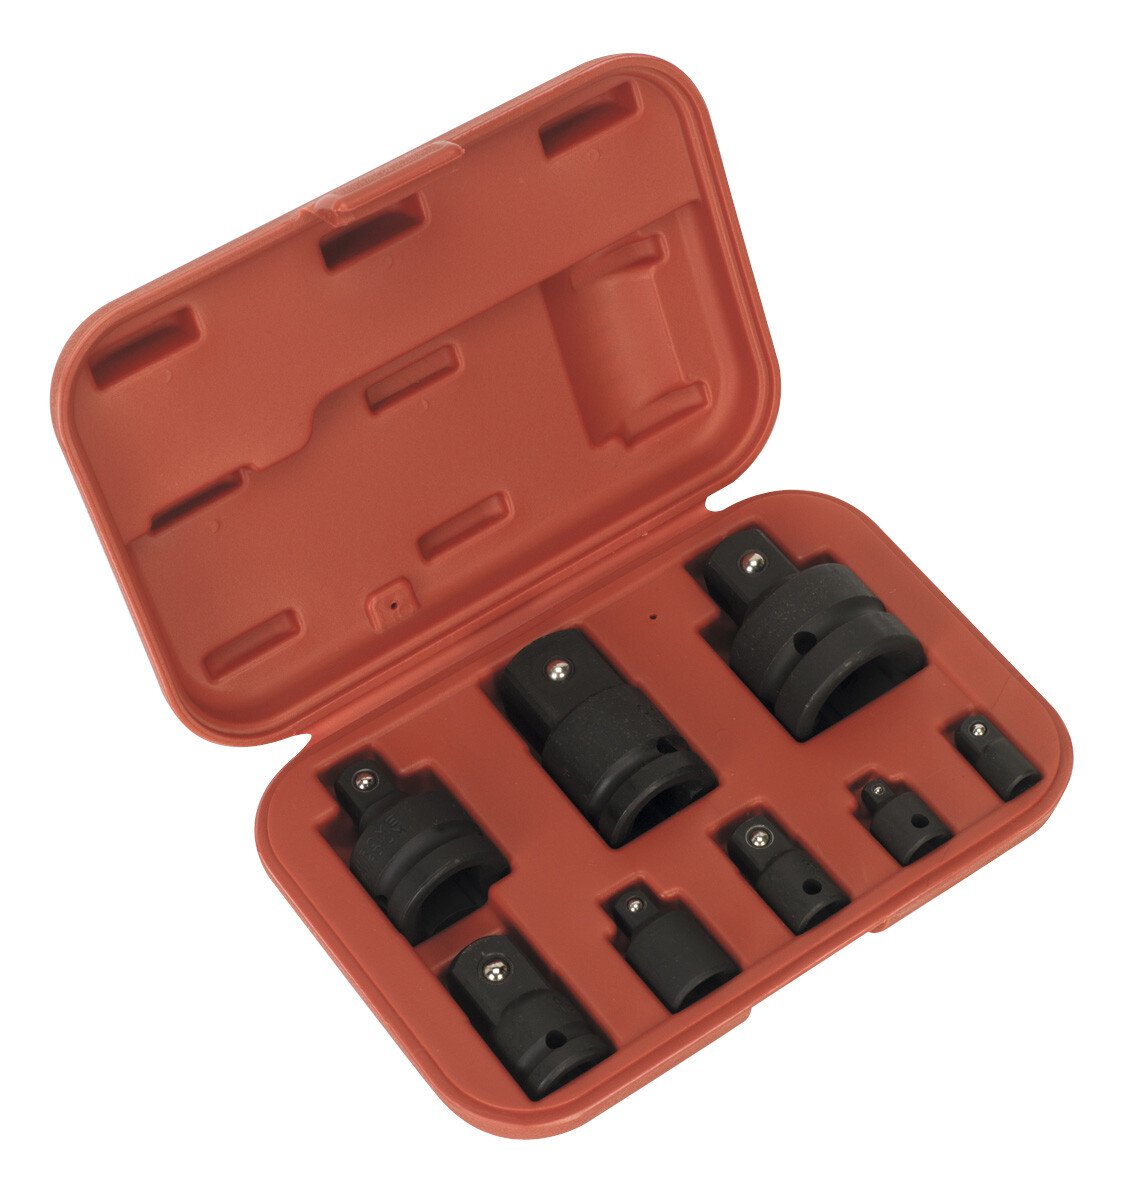 Sealey AK5900B Impact Socket Adaptor Set in Storage Case 8 Piece